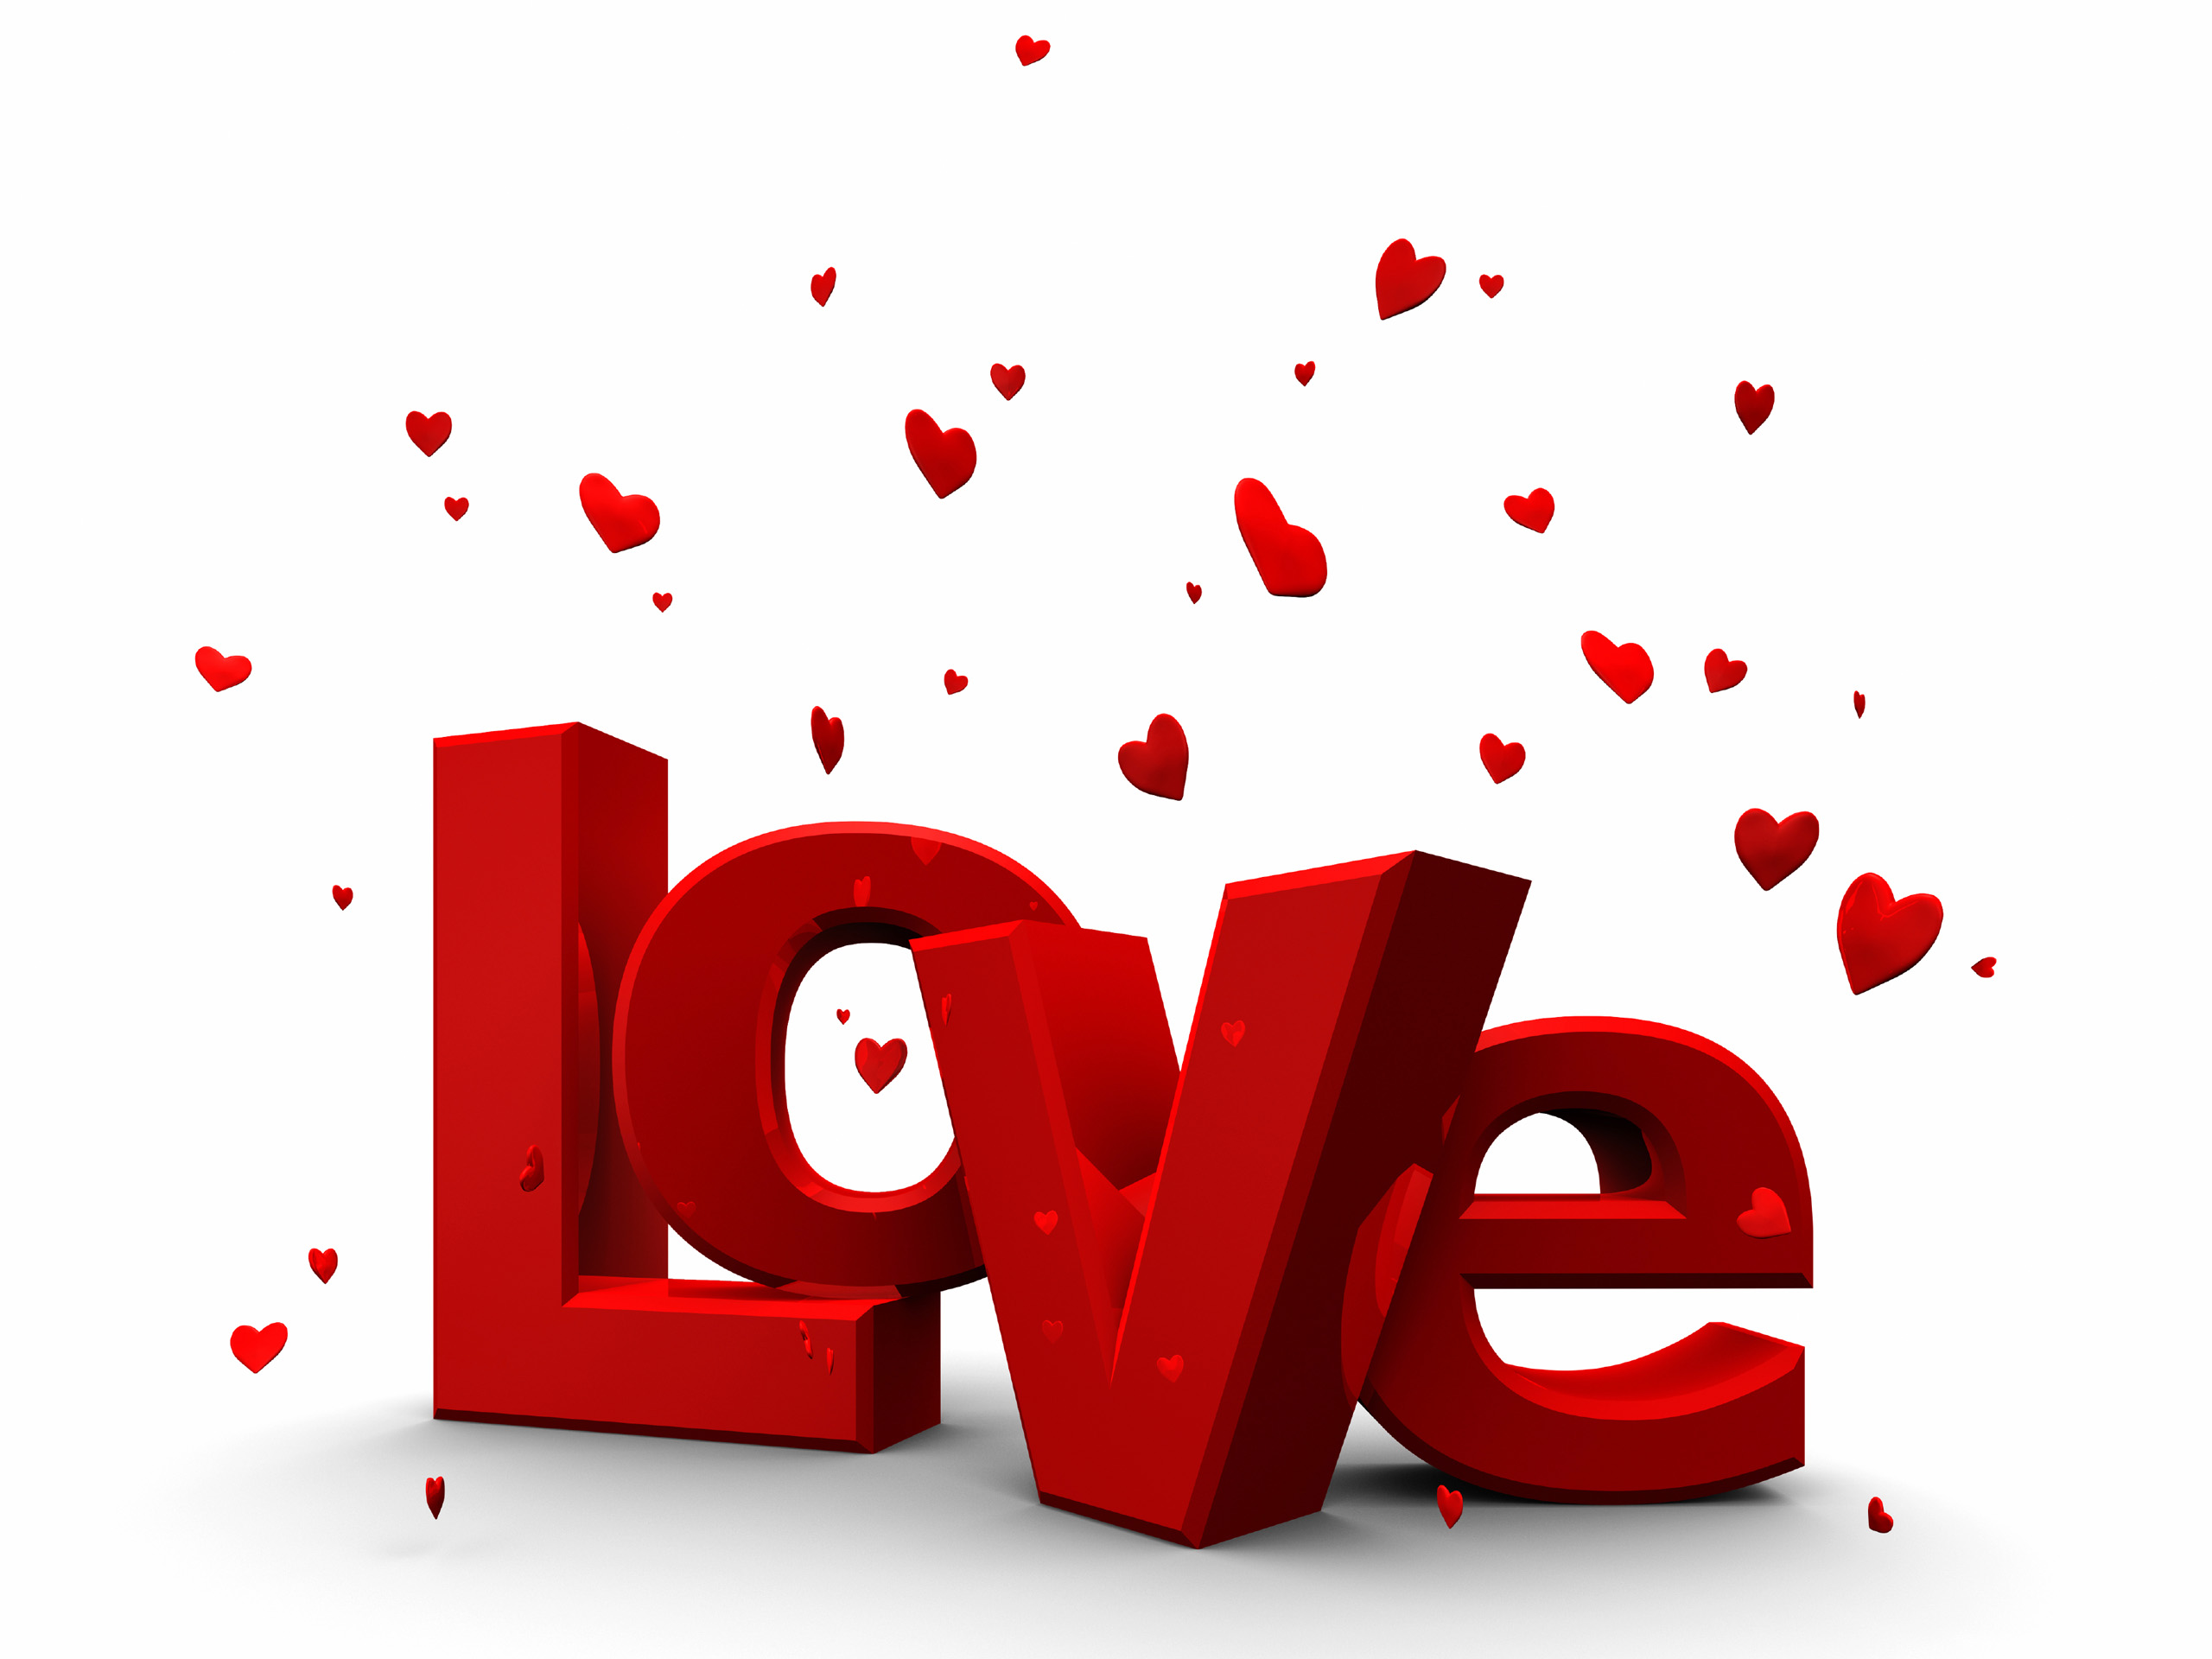 Download wallpaper: word Love, Love wallpaper, download photo wallpapers  for desktop